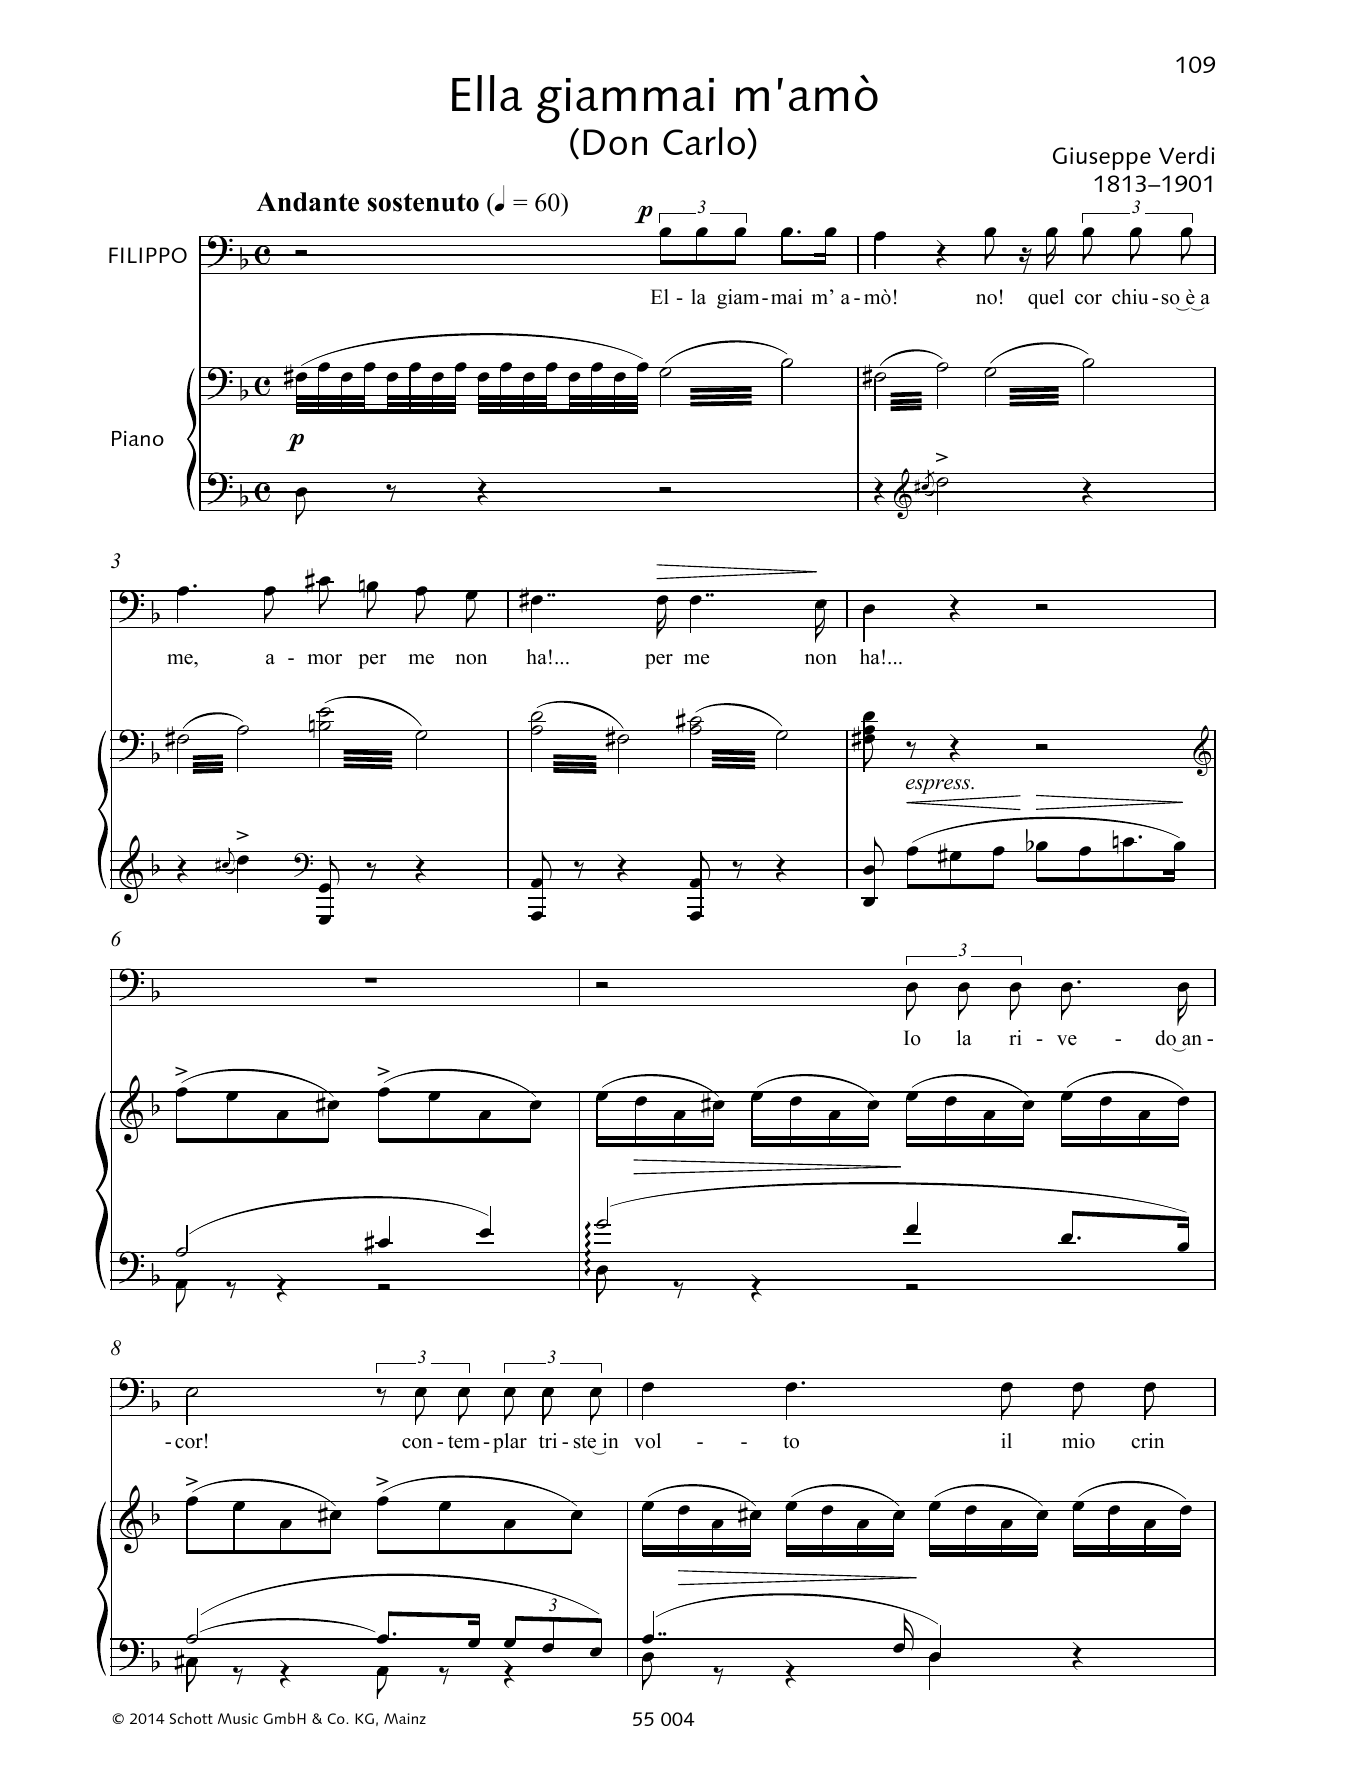 Download Giuseppe Verdi Ella giammai m'amò Sheet Music and learn how to play Piano & Vocal PDF digital score in minutes